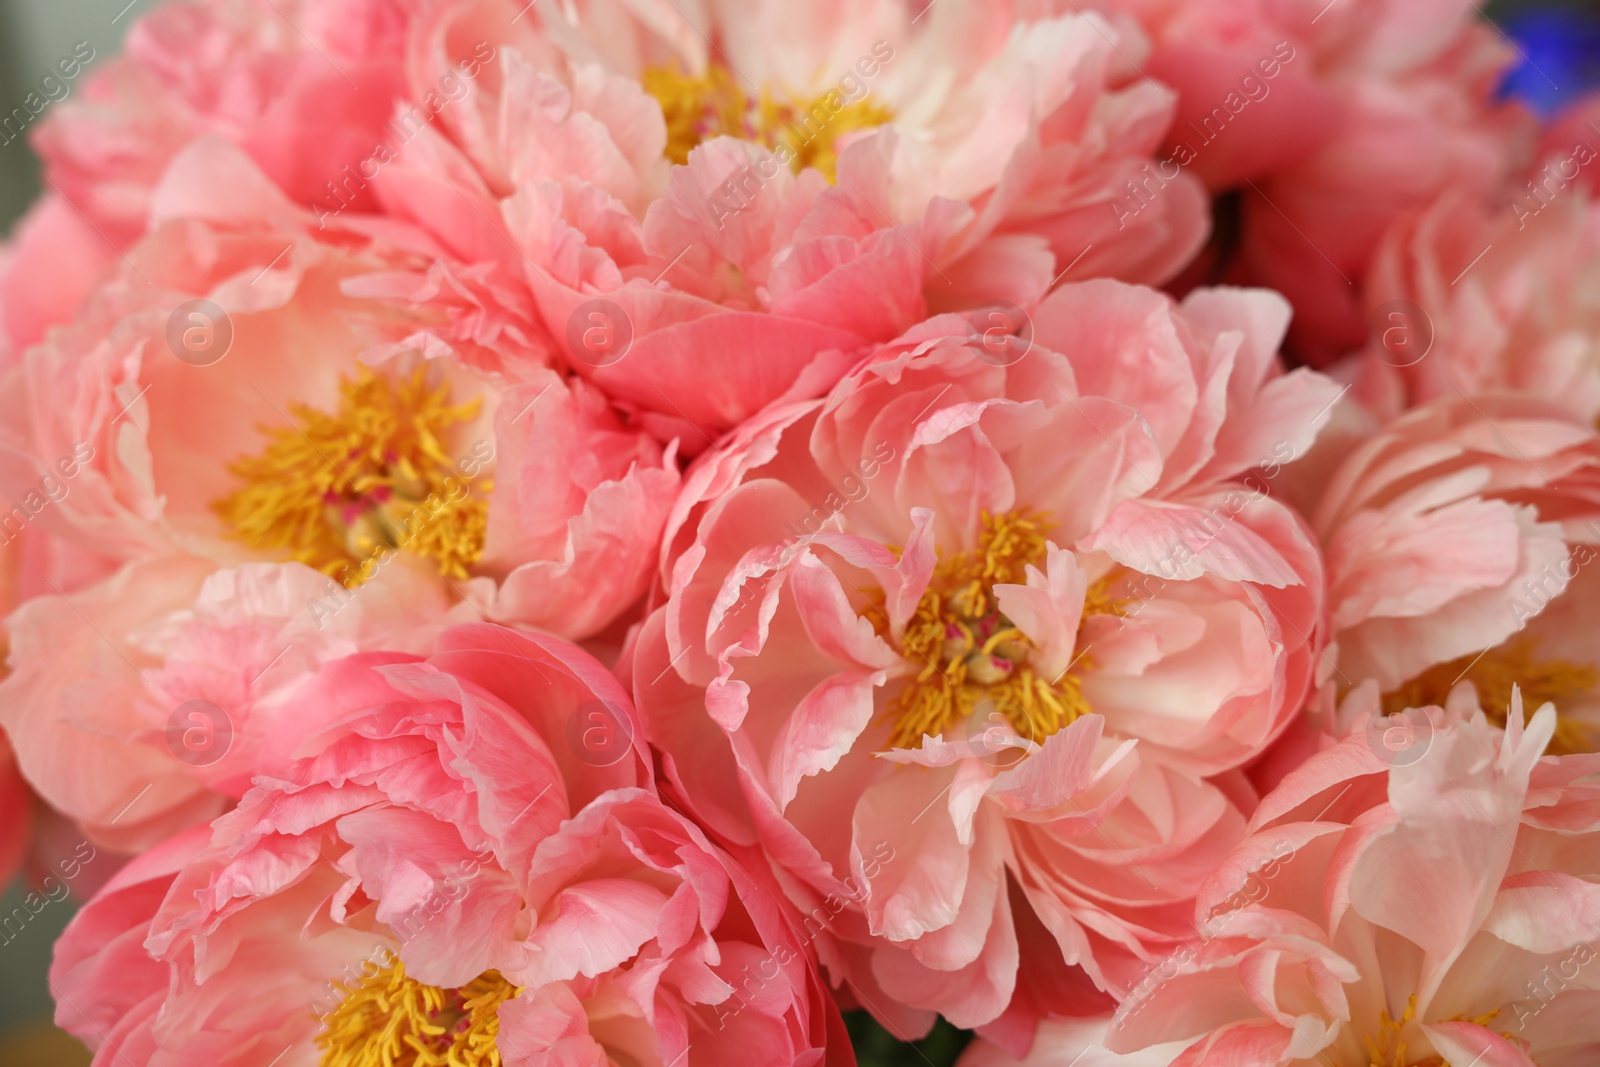 Photo of Many beautiful pink peony flowers, closeup view